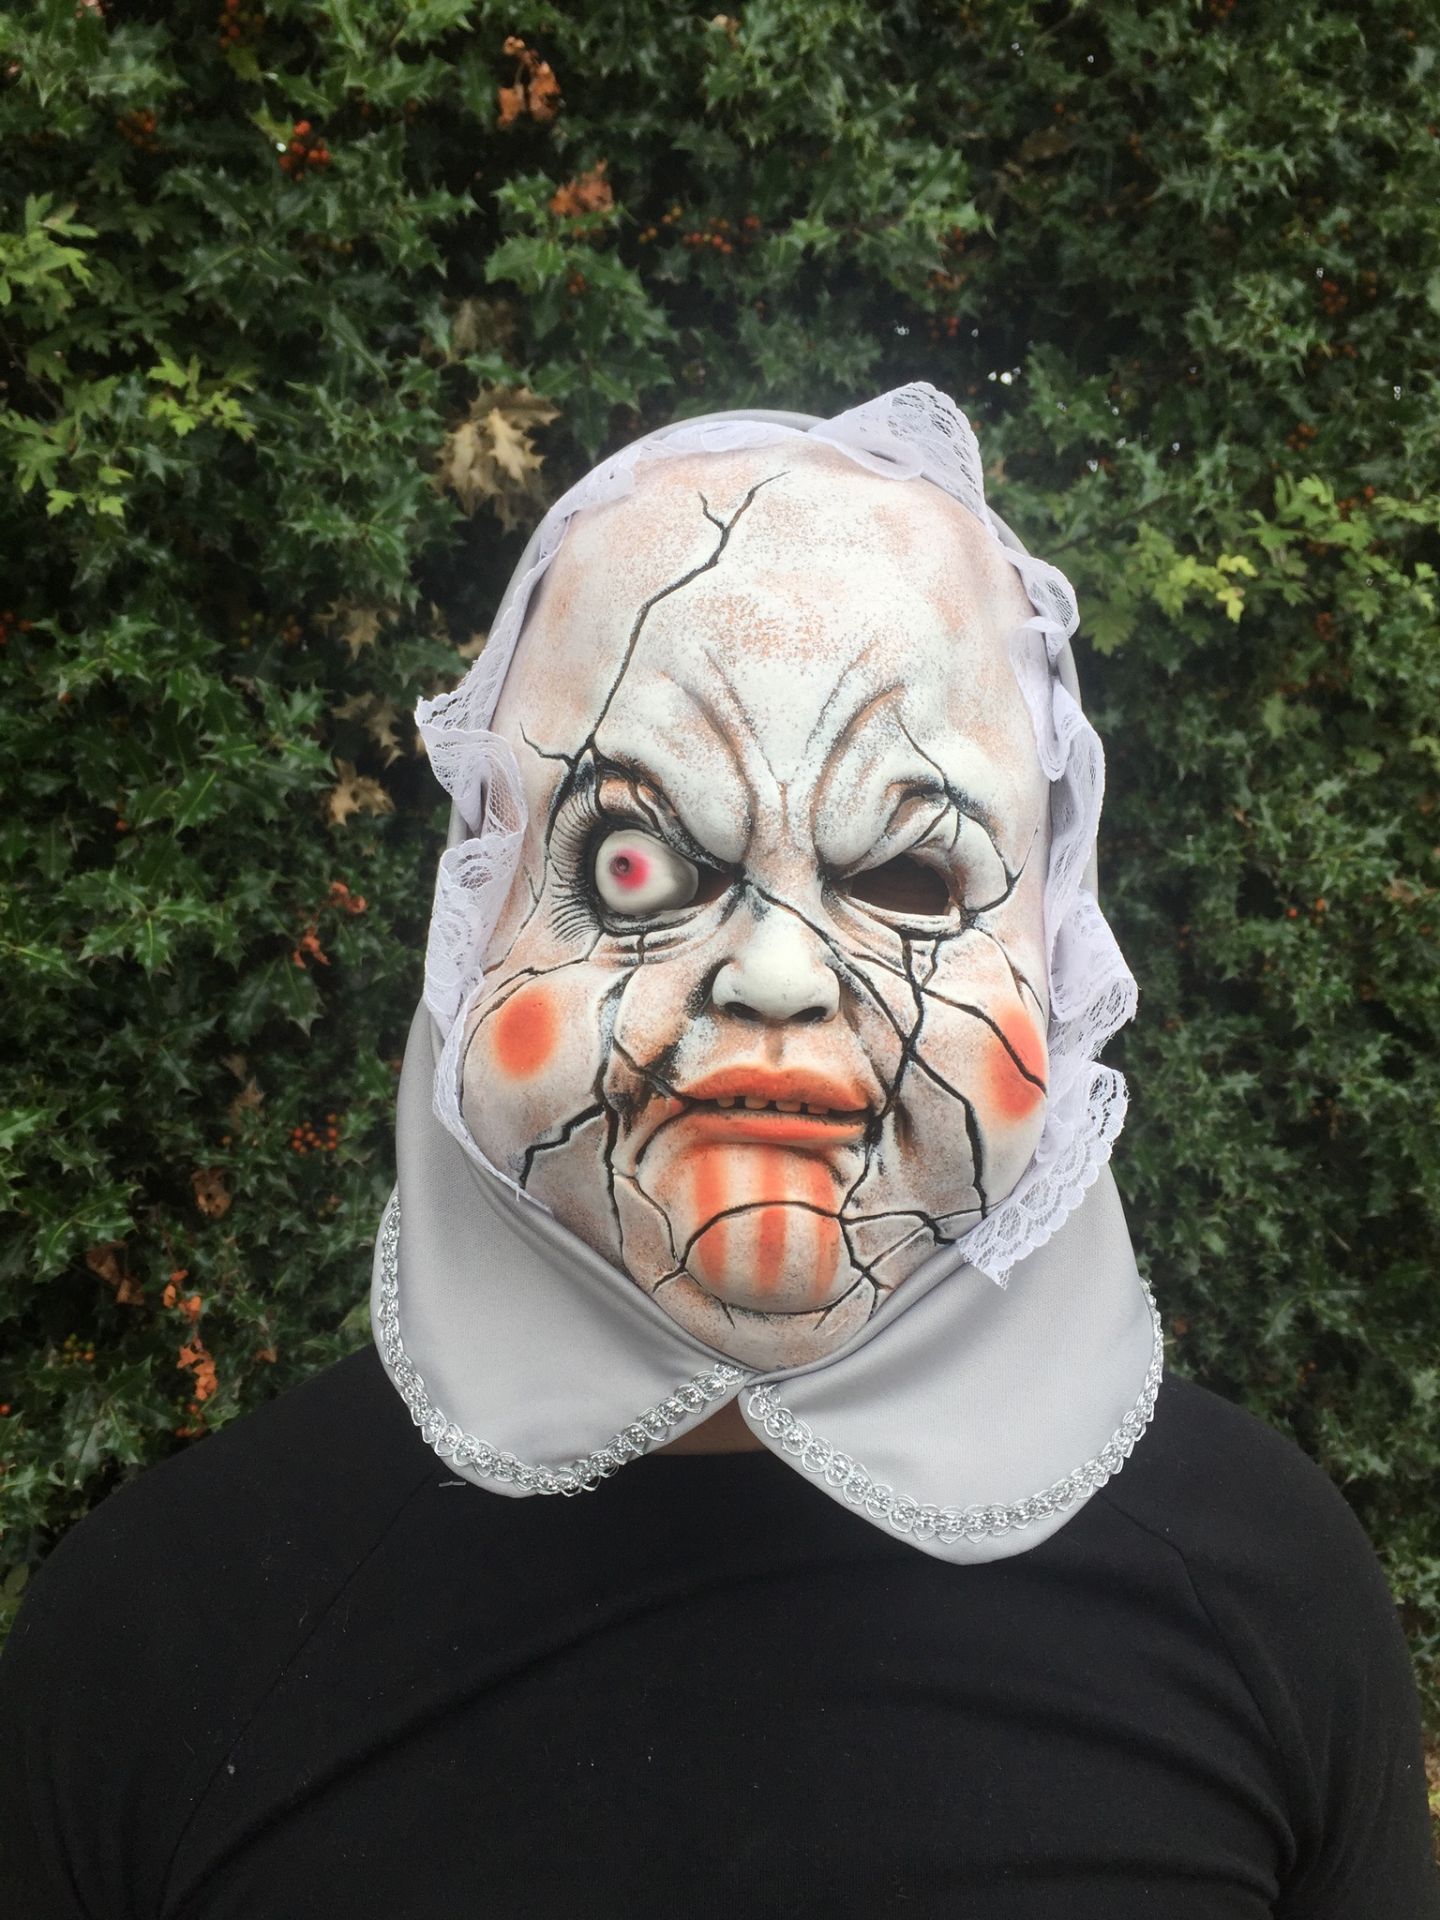 Job lot of 100 Latex Halloween Full Head Masks - New Liquidated Stock - Image 2 of 10